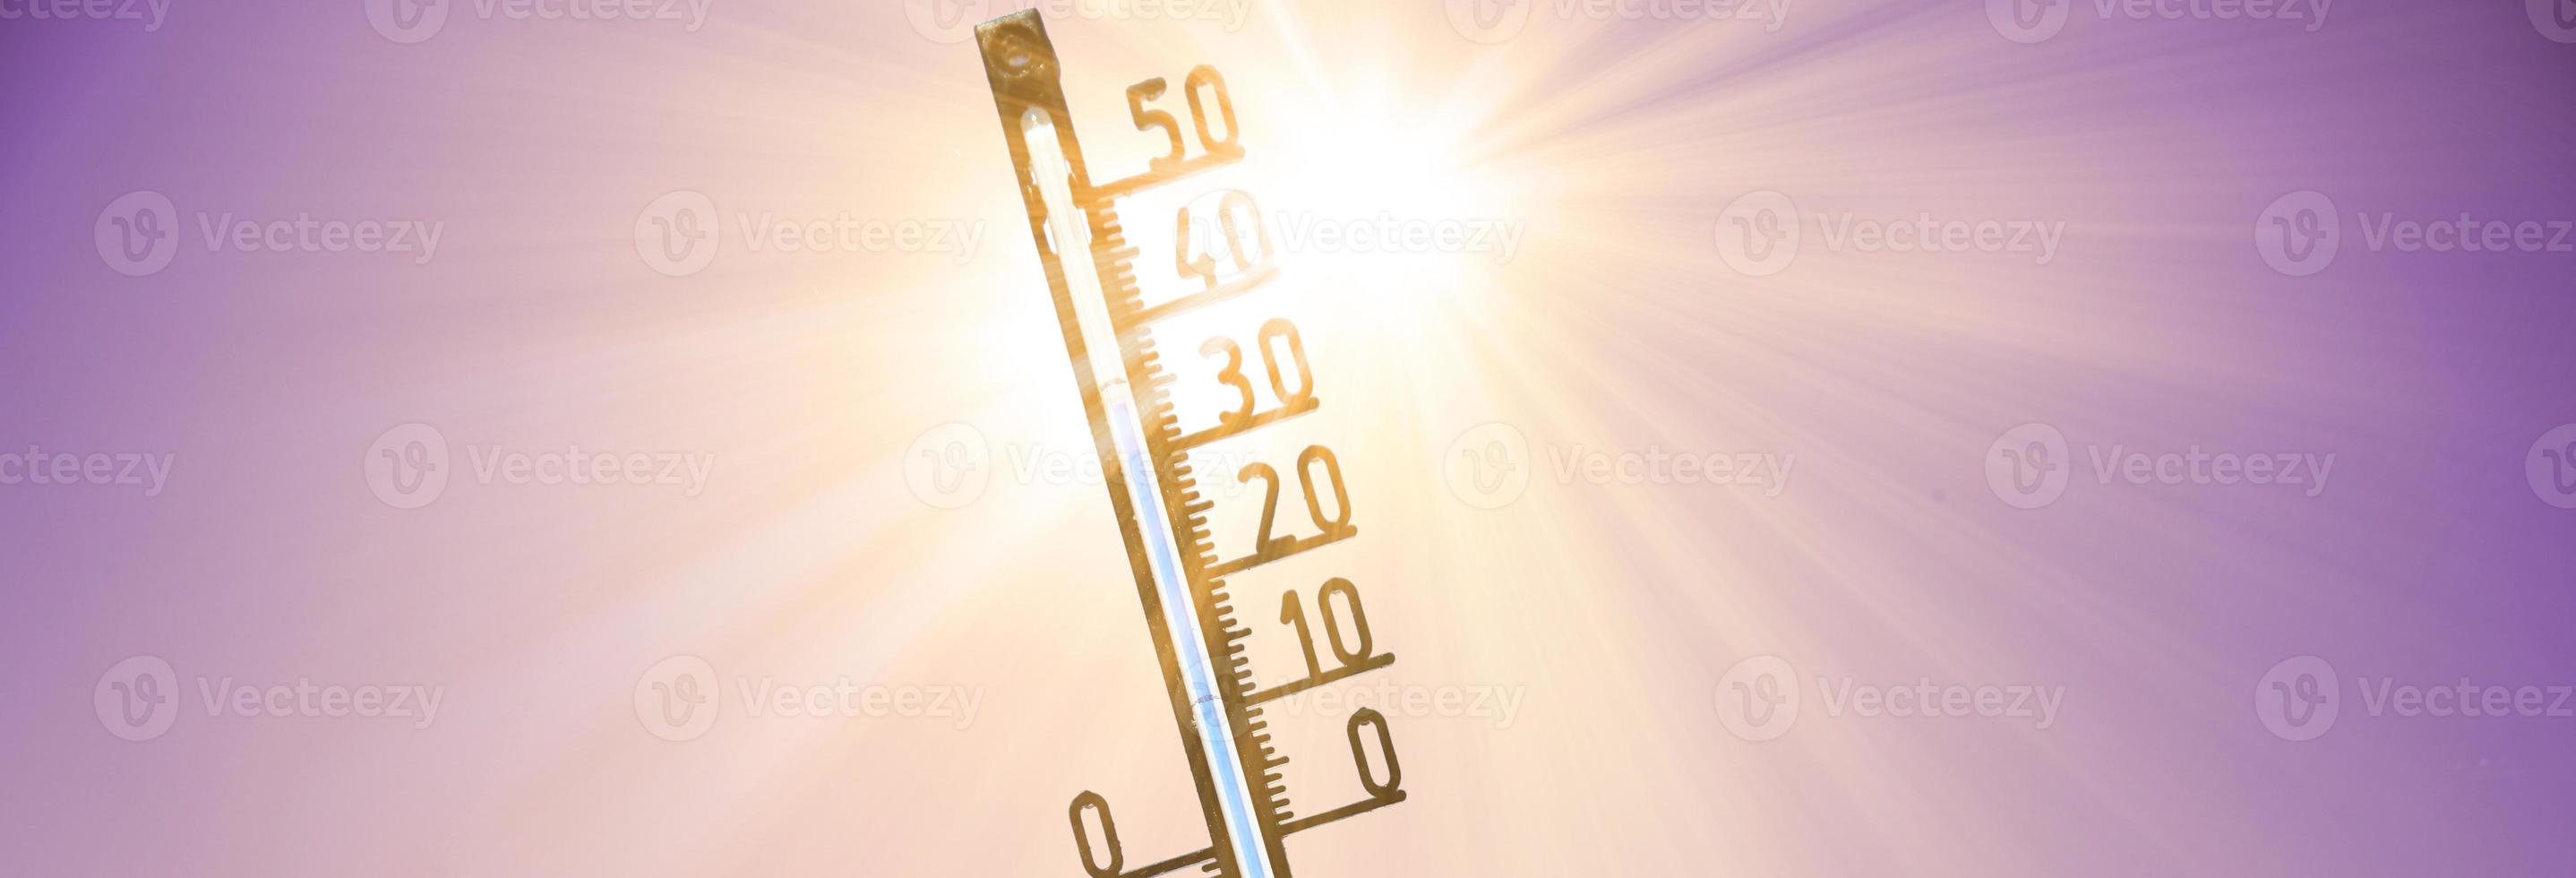 termometer med celsiusskala som visar extremt hög temperatur. foto